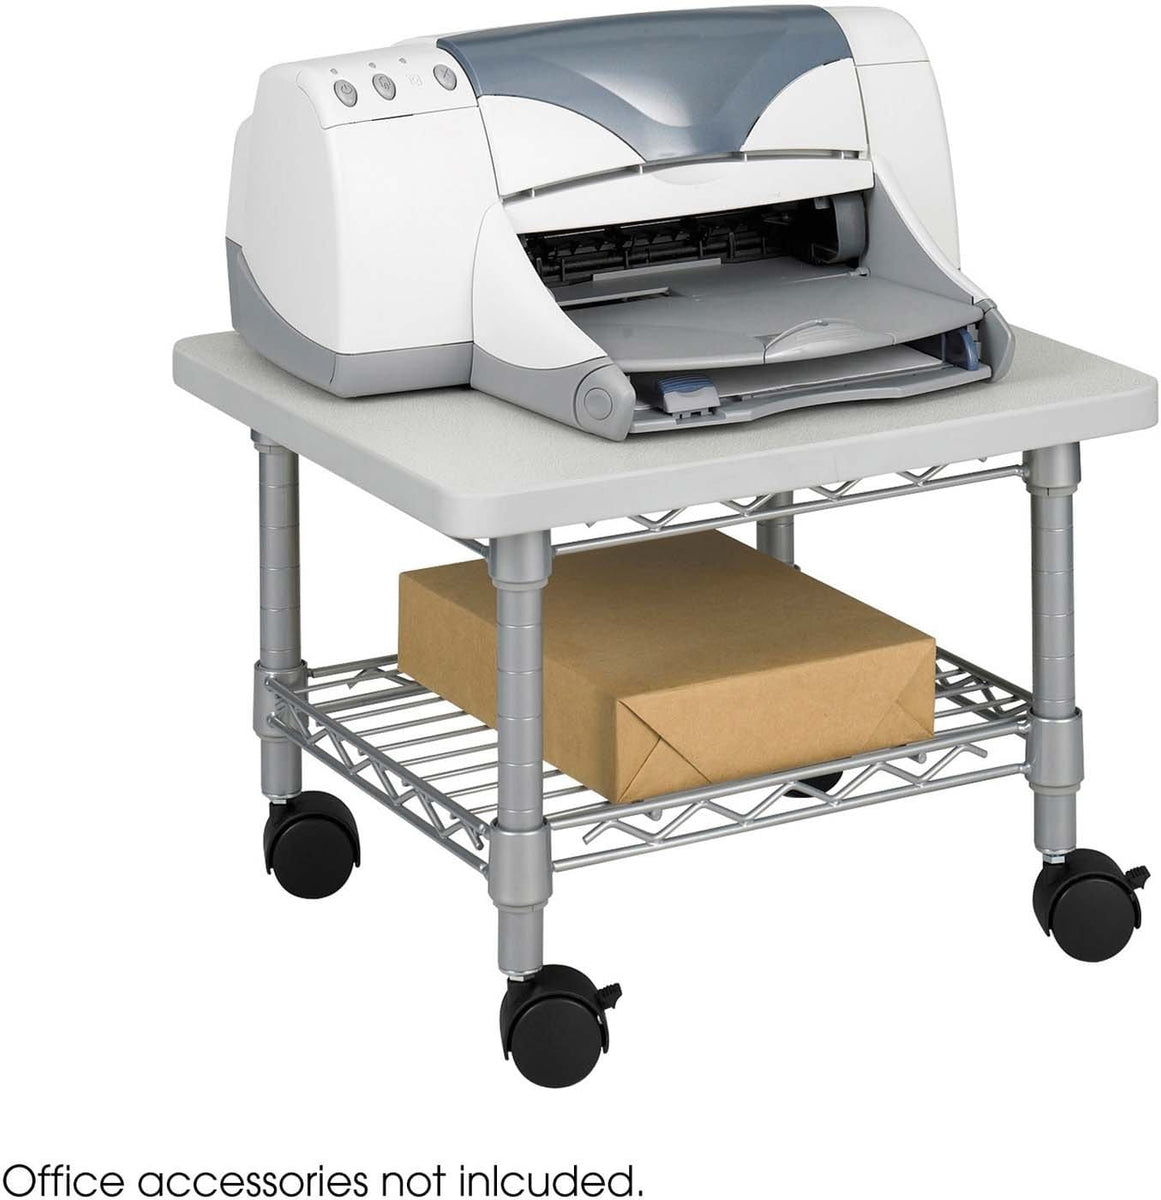 Safco Under Desk Printer/Fax Stand 5206